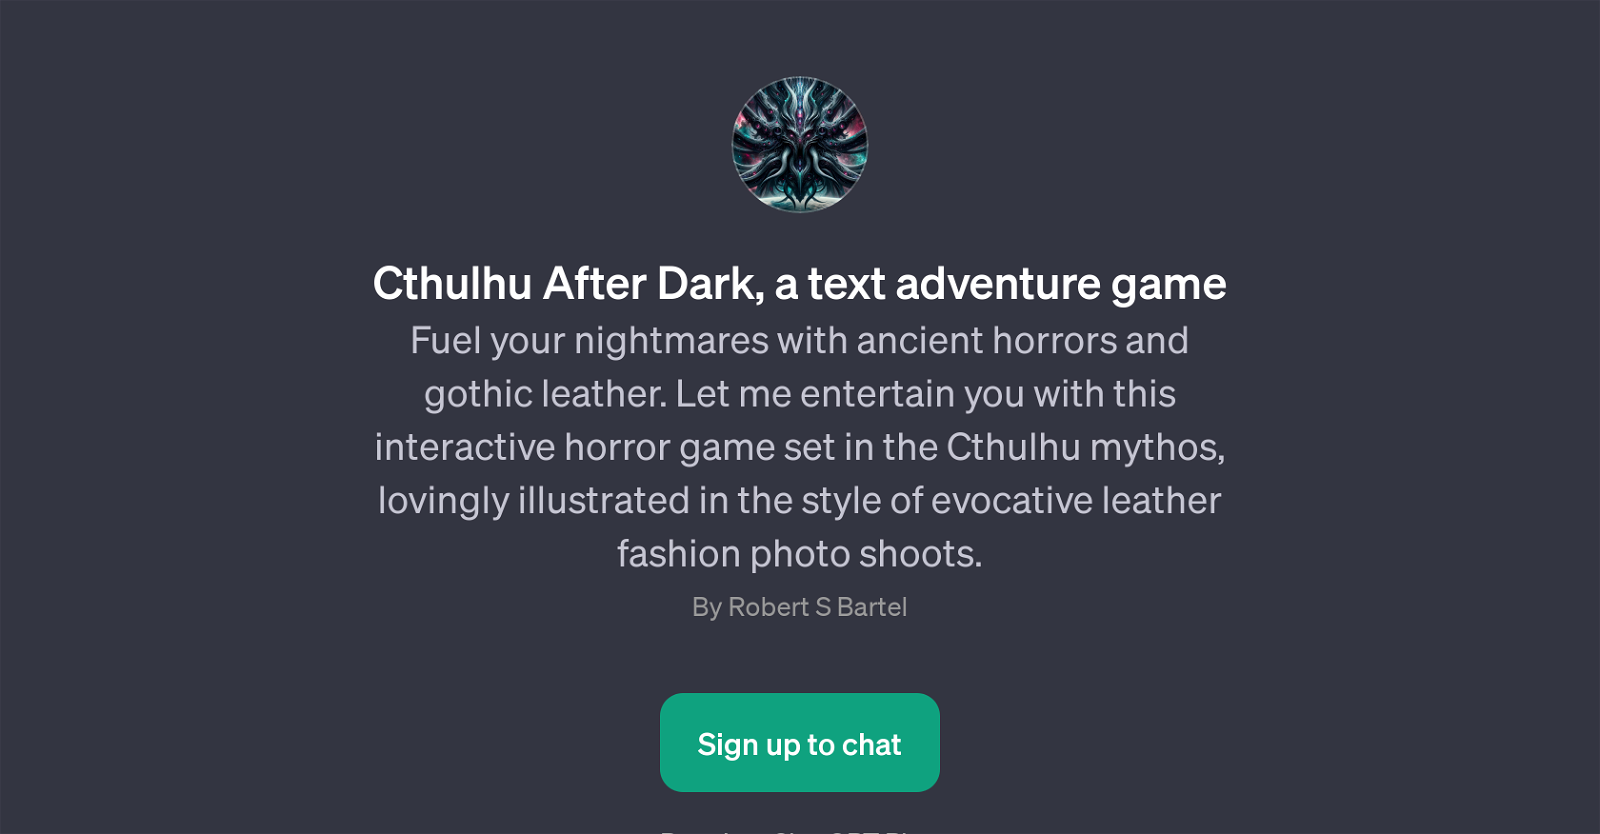 Cthulhu After Dark website